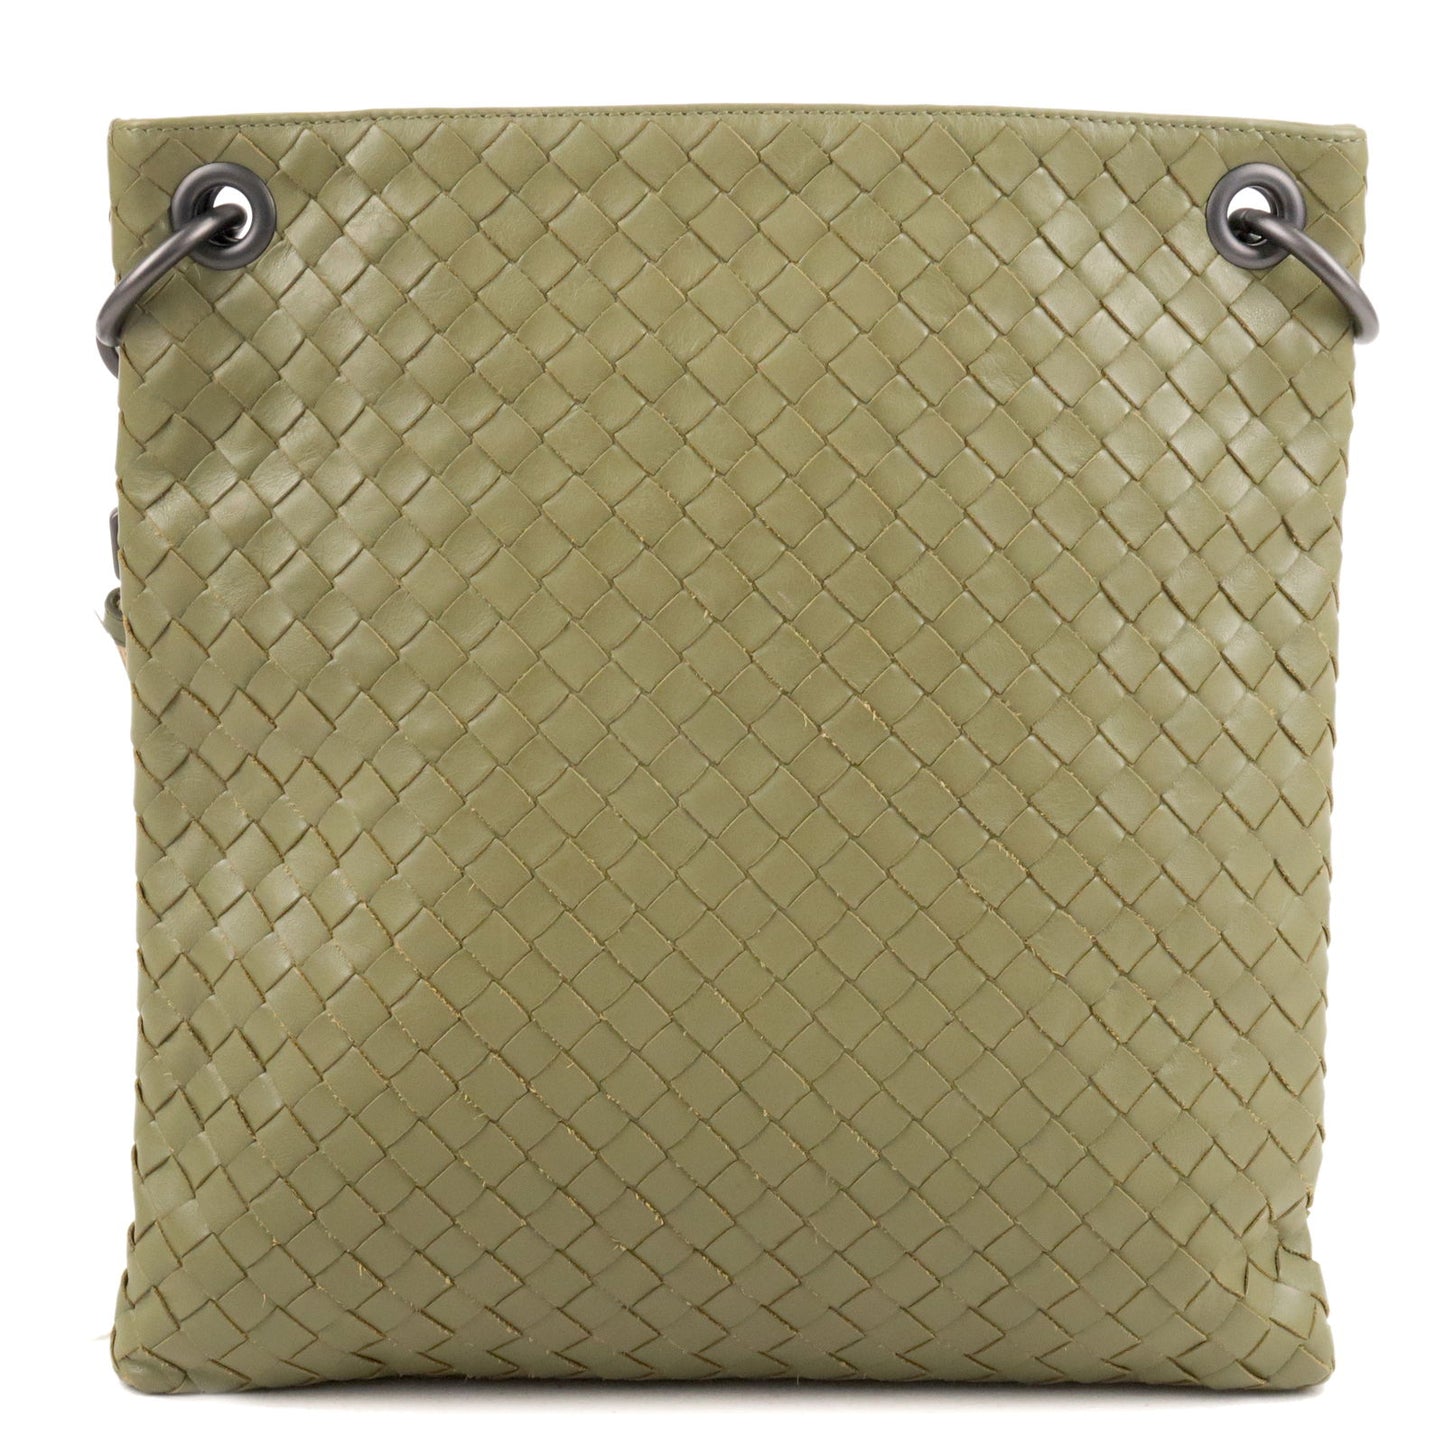 BOTTEGA VENETA Intrecciato Leather Shoulder Bag Khaki 172736